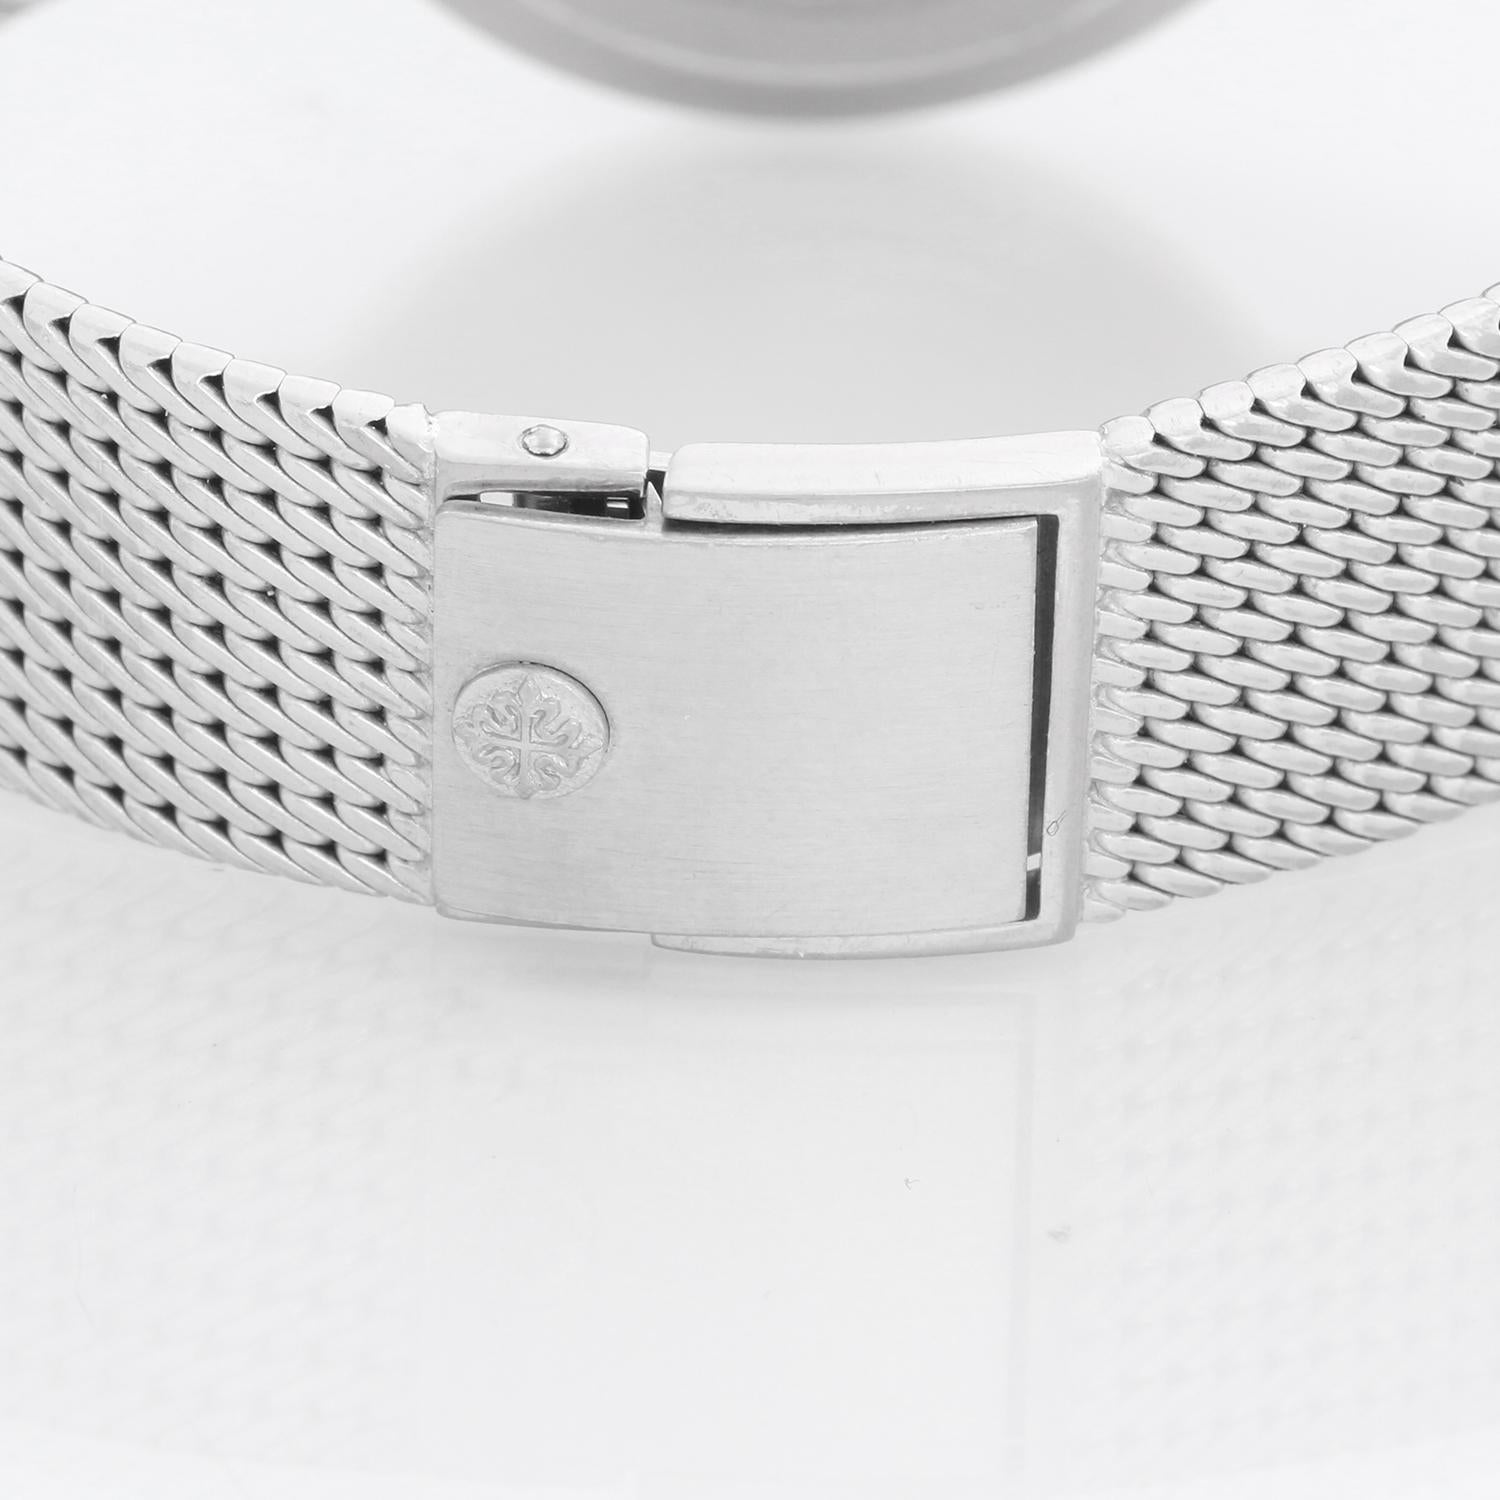 Patek Philippe Calatrava Men's 18k White Gold Watch. Ref. 3893 3